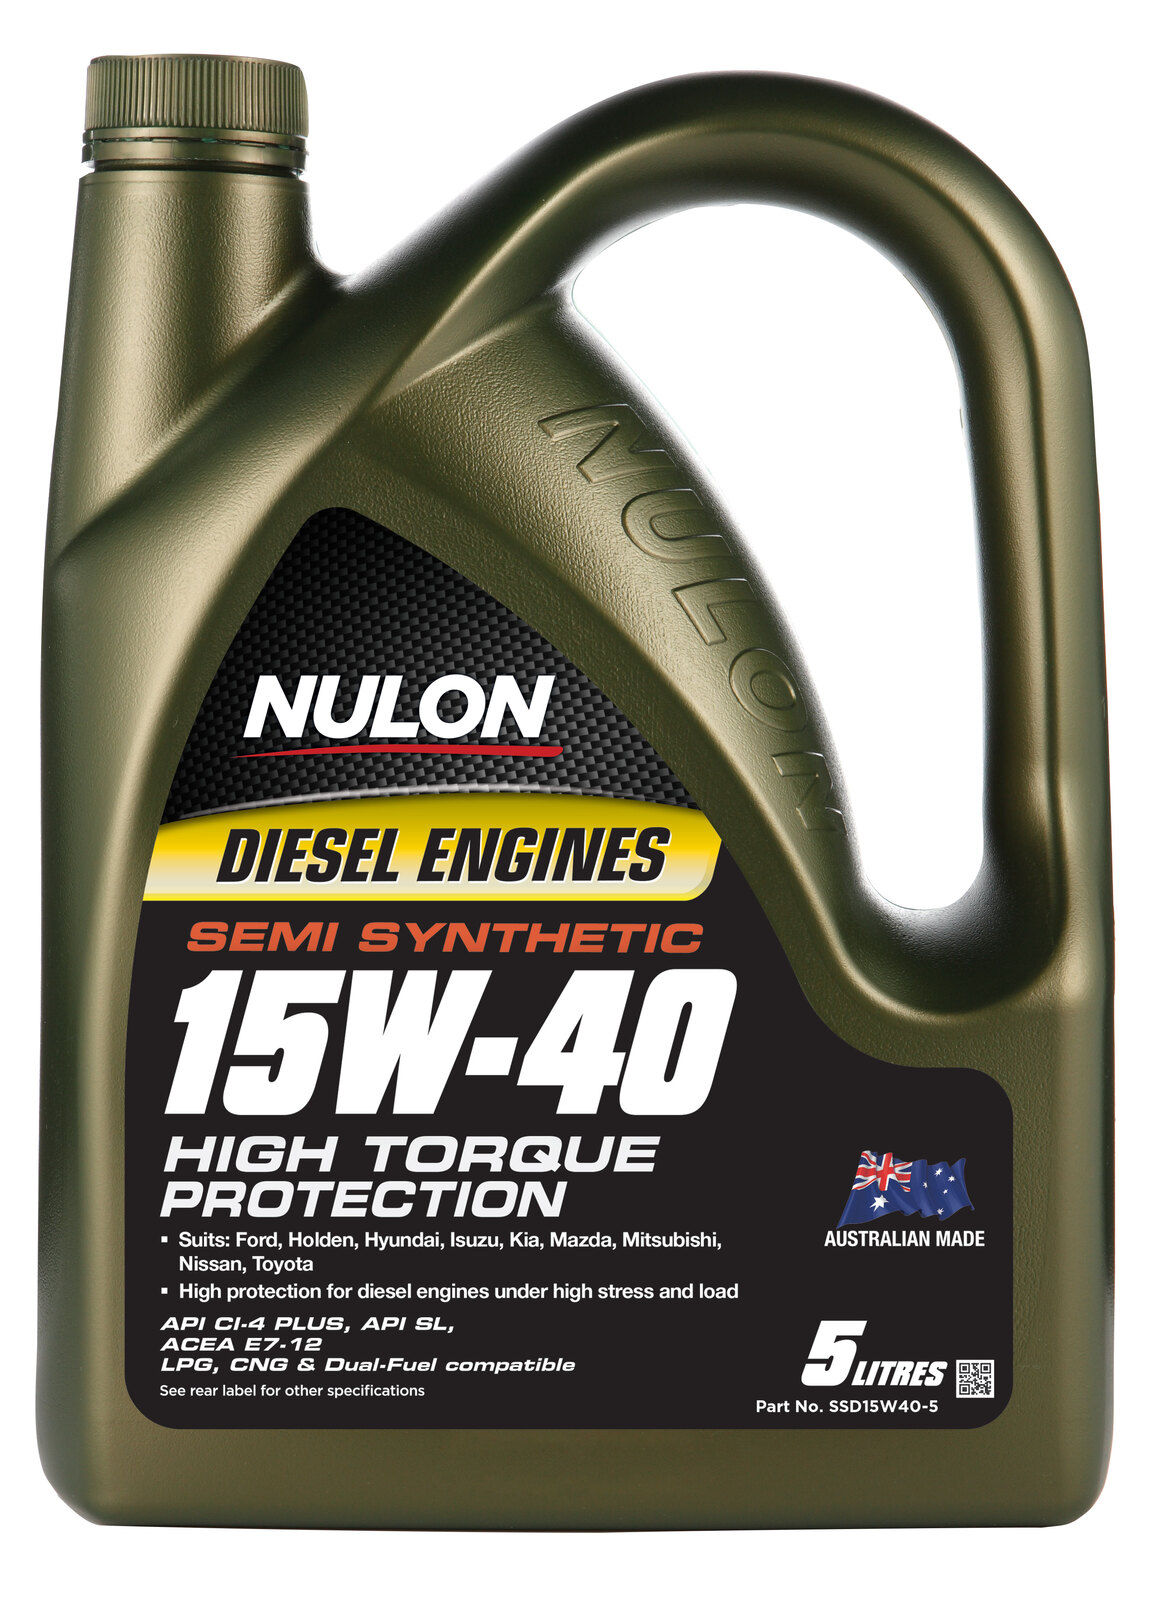 NULON High Torque Diesel 15W40 Engine Oil 5L, Each